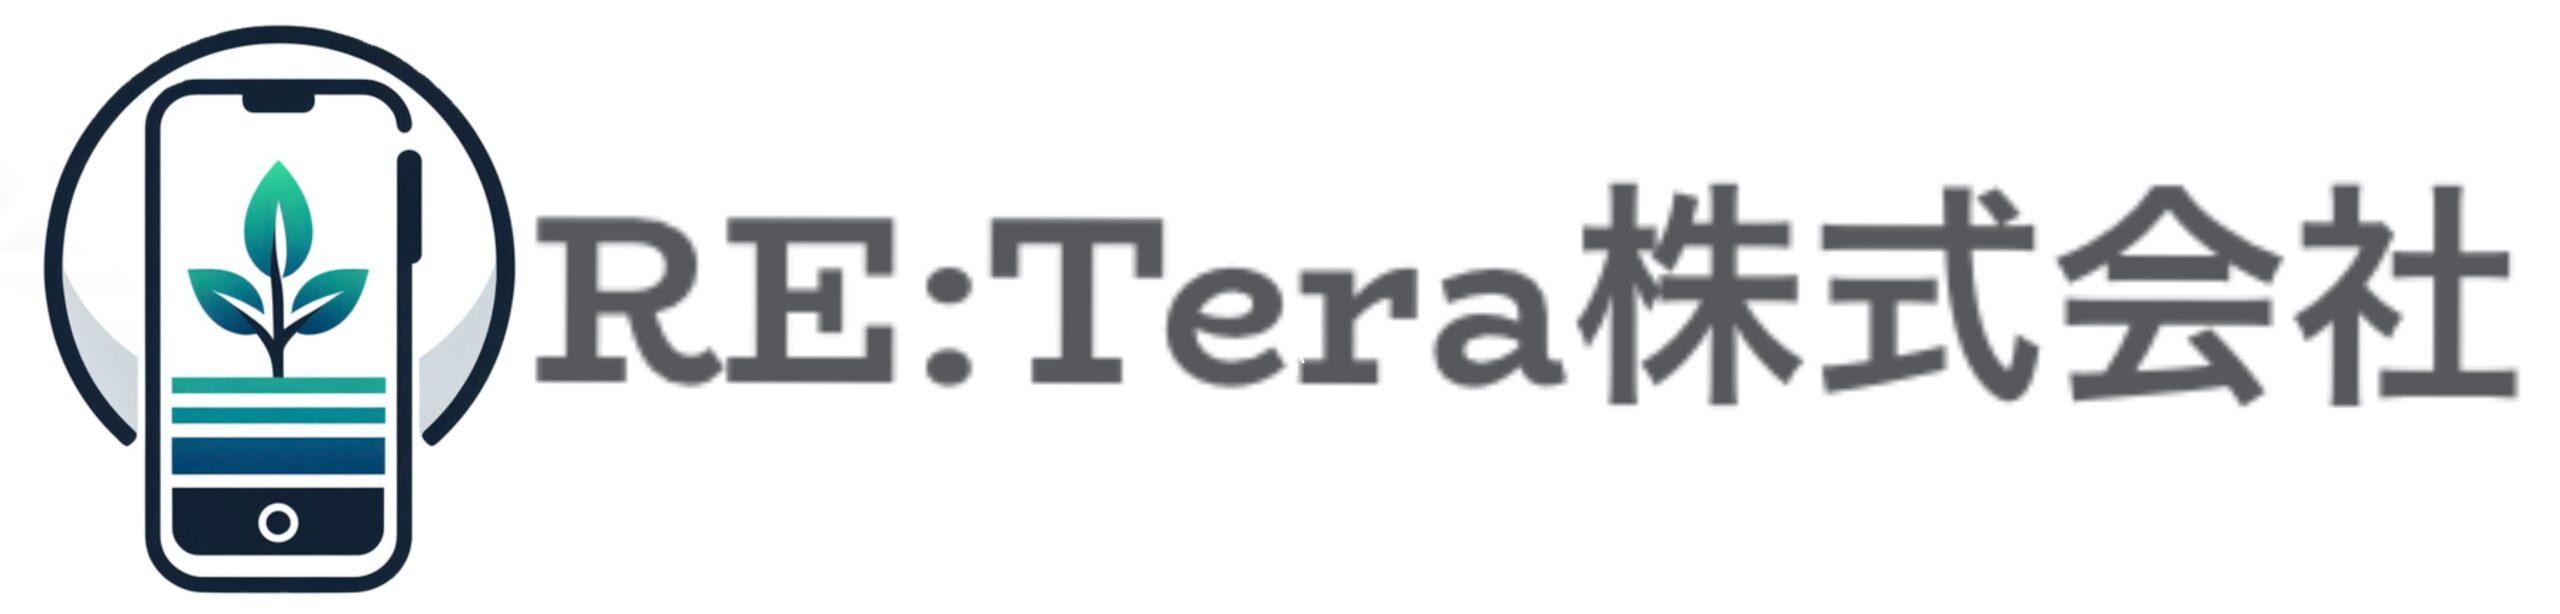 RE:Tera株式会社